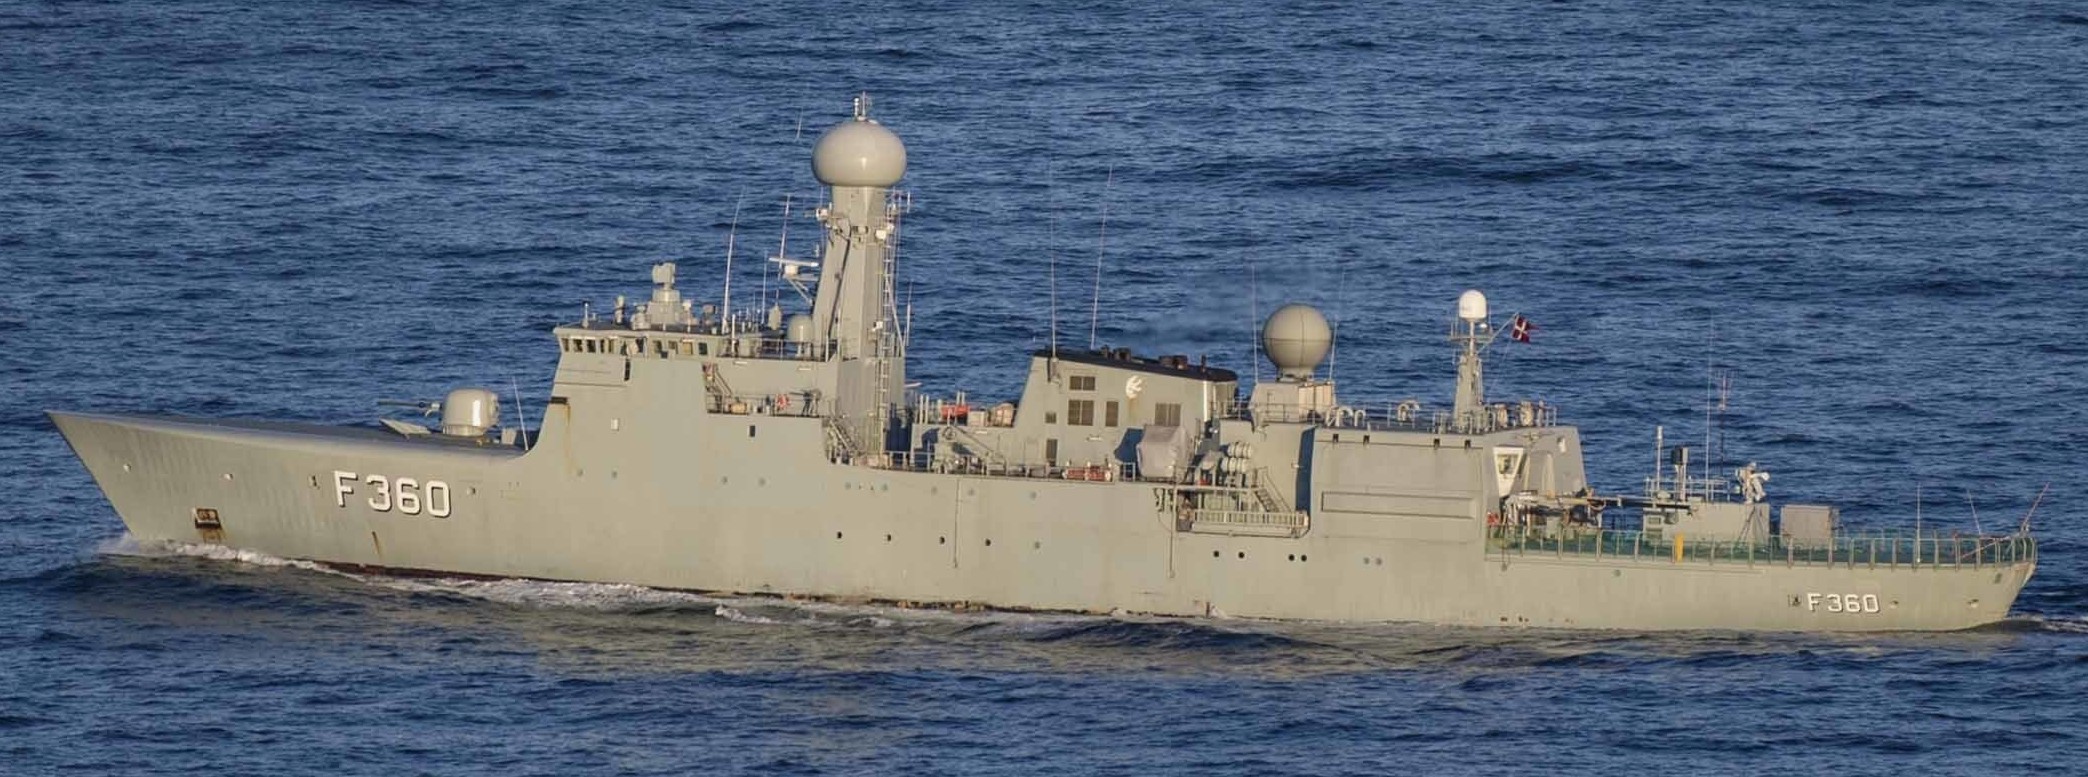 f-360 hdms hvidbjornen thetis class ocean patrol frigate royal danish navy kongelige danske marine kdm inspektionsskibet 35